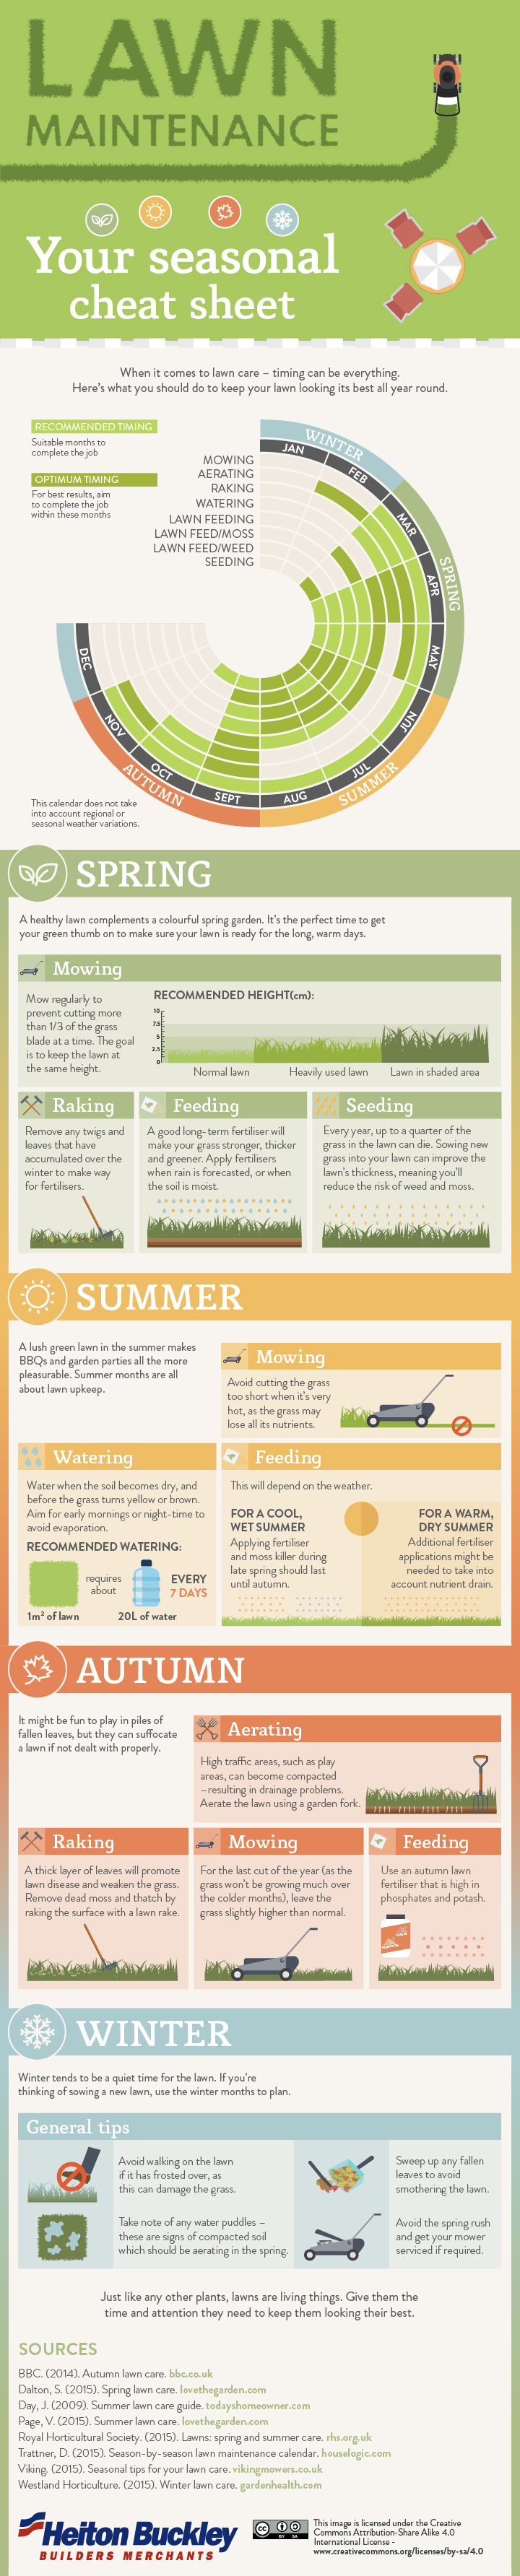 lawn-maintenance-your-seasonal-cheat-sheet